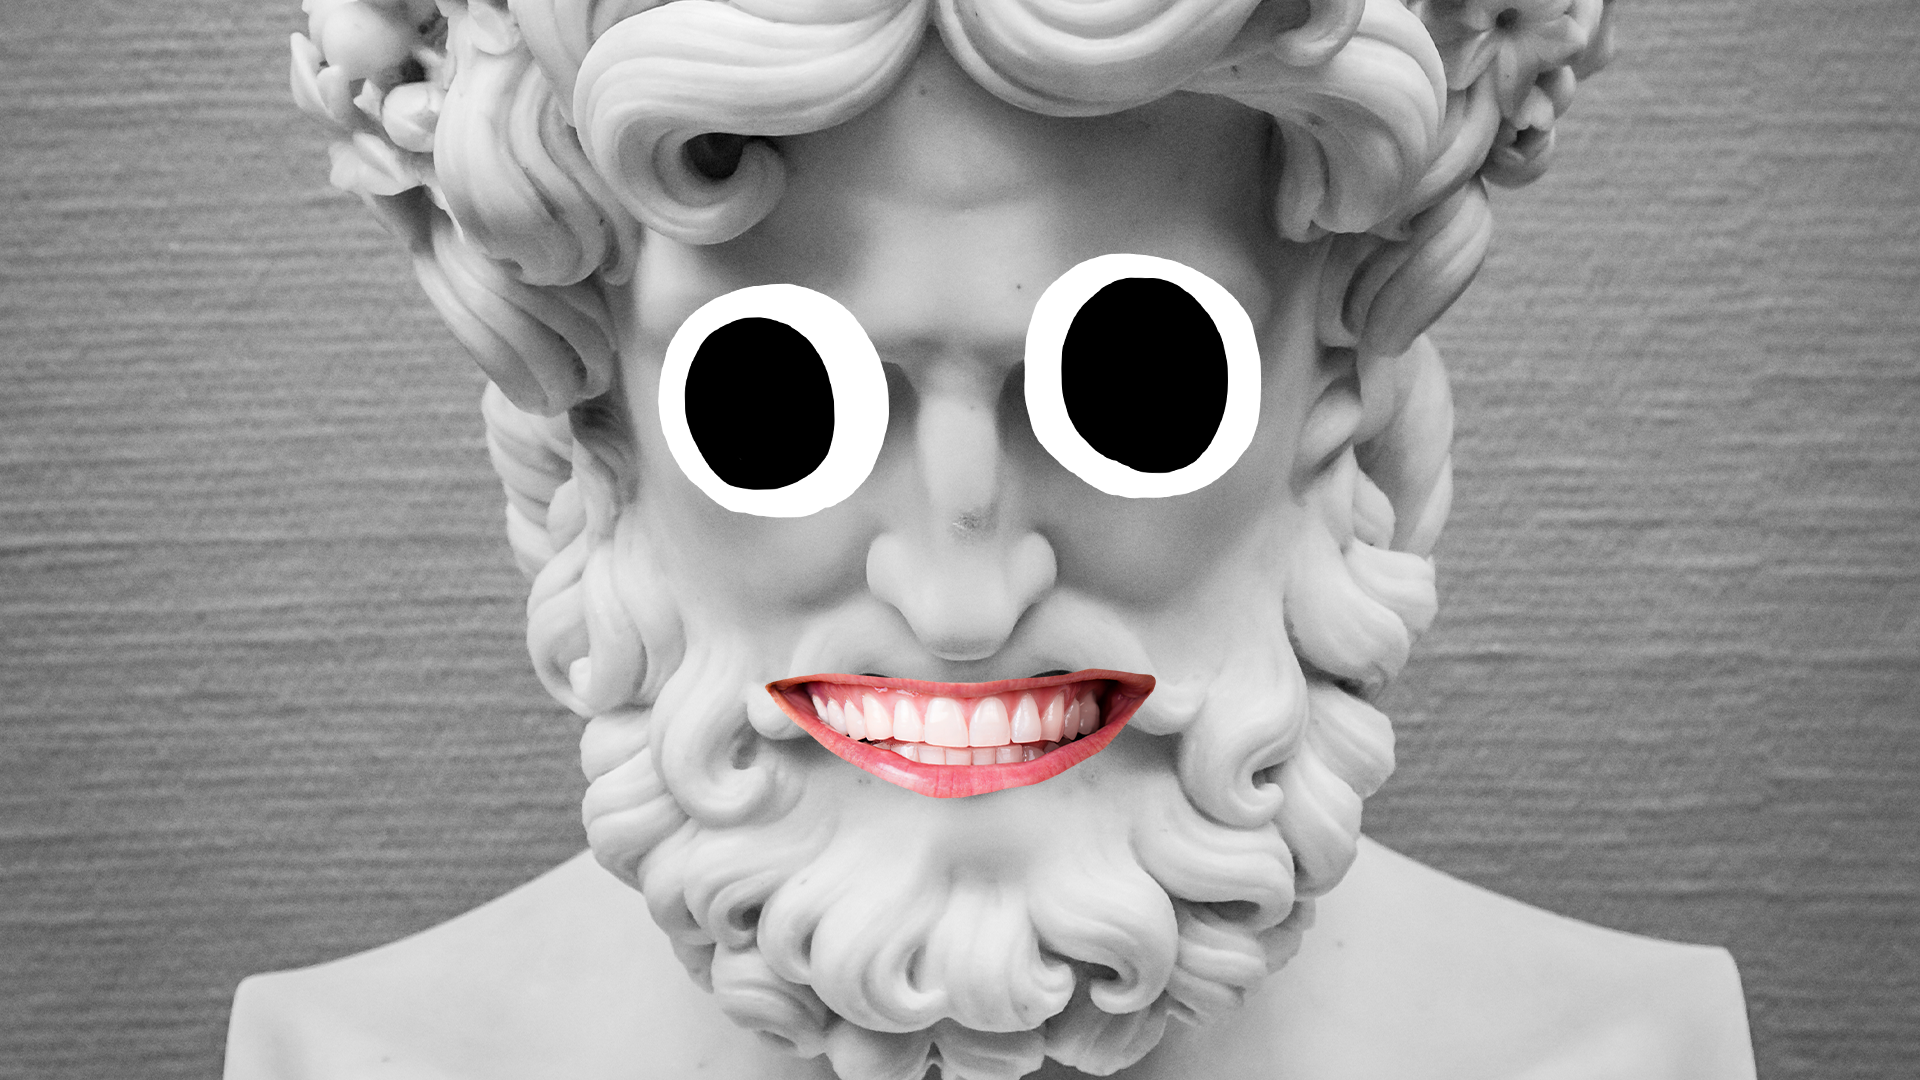 Roman statue smiling mischievously 